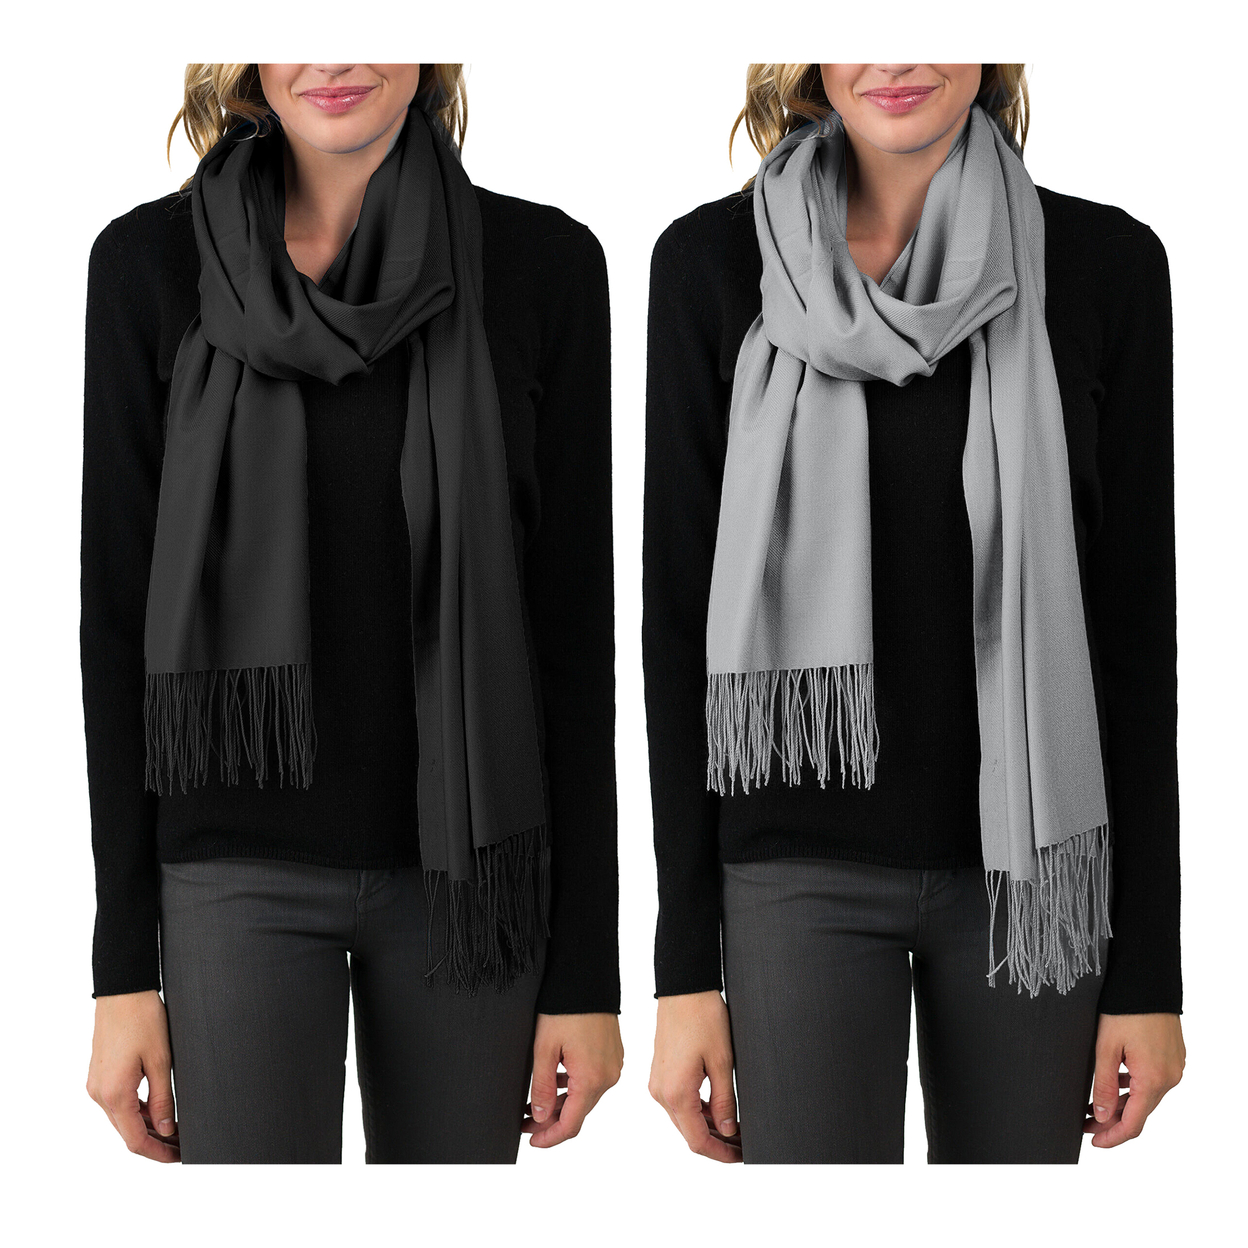 2-Pack: Women's Ultra Soft Cashmere Feel Winter Warm Scarfs - Black&Grey